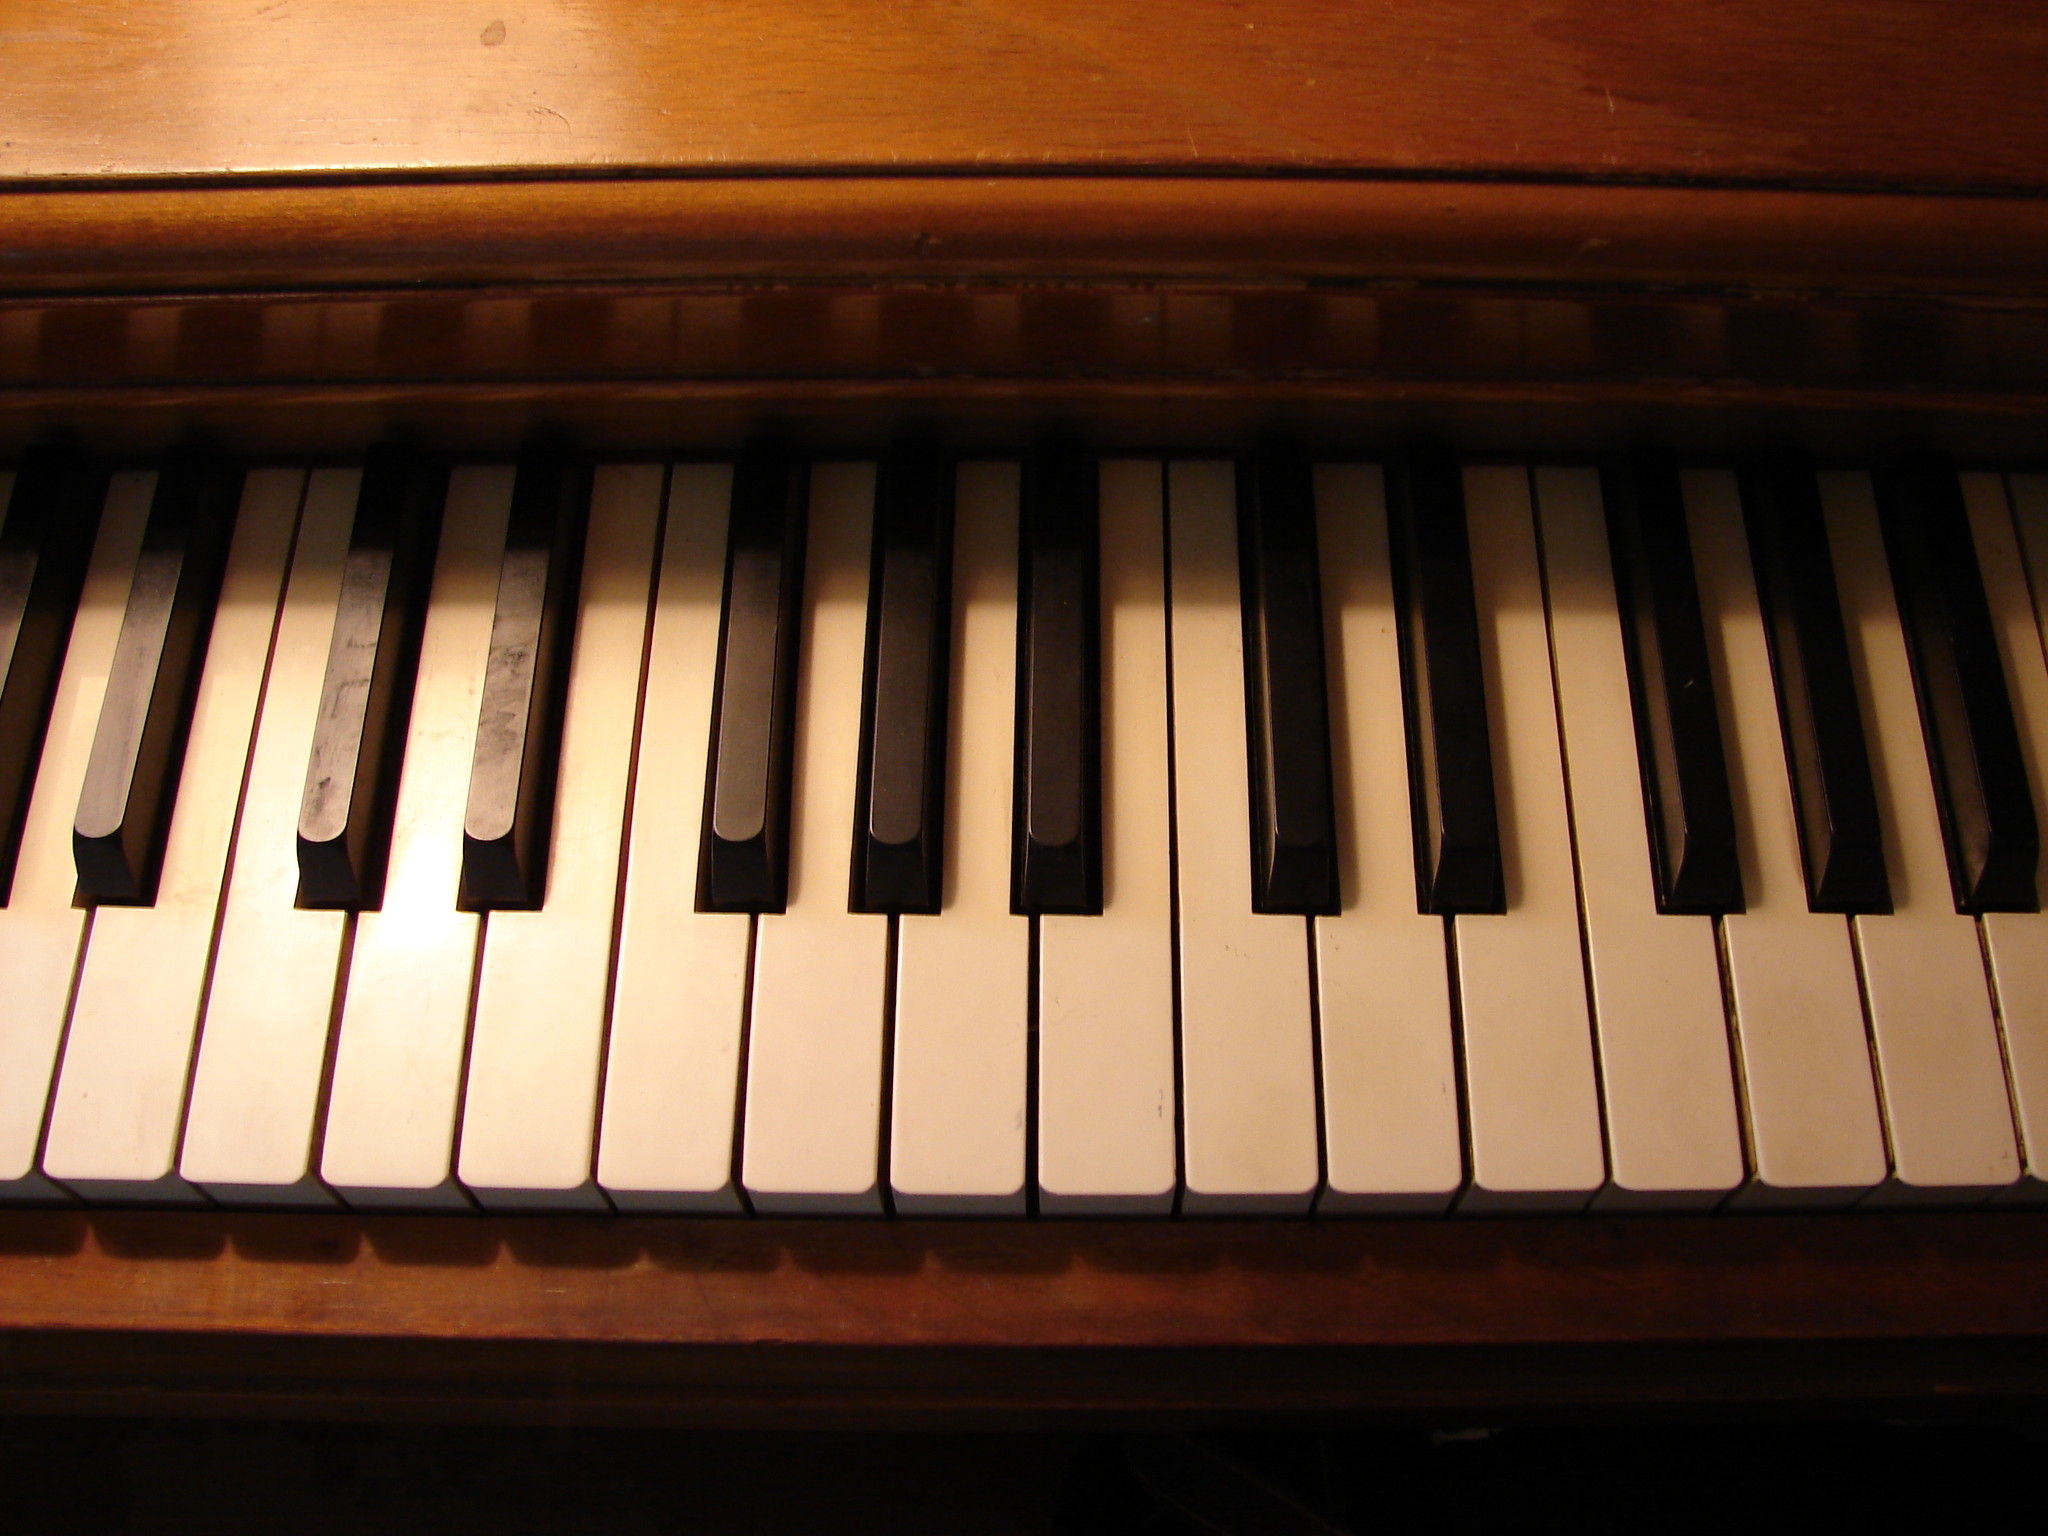 Клавиши классического пианино. Пианино. Клавиши фортепиано. Фортепиано. Клавиши фортепьяно.